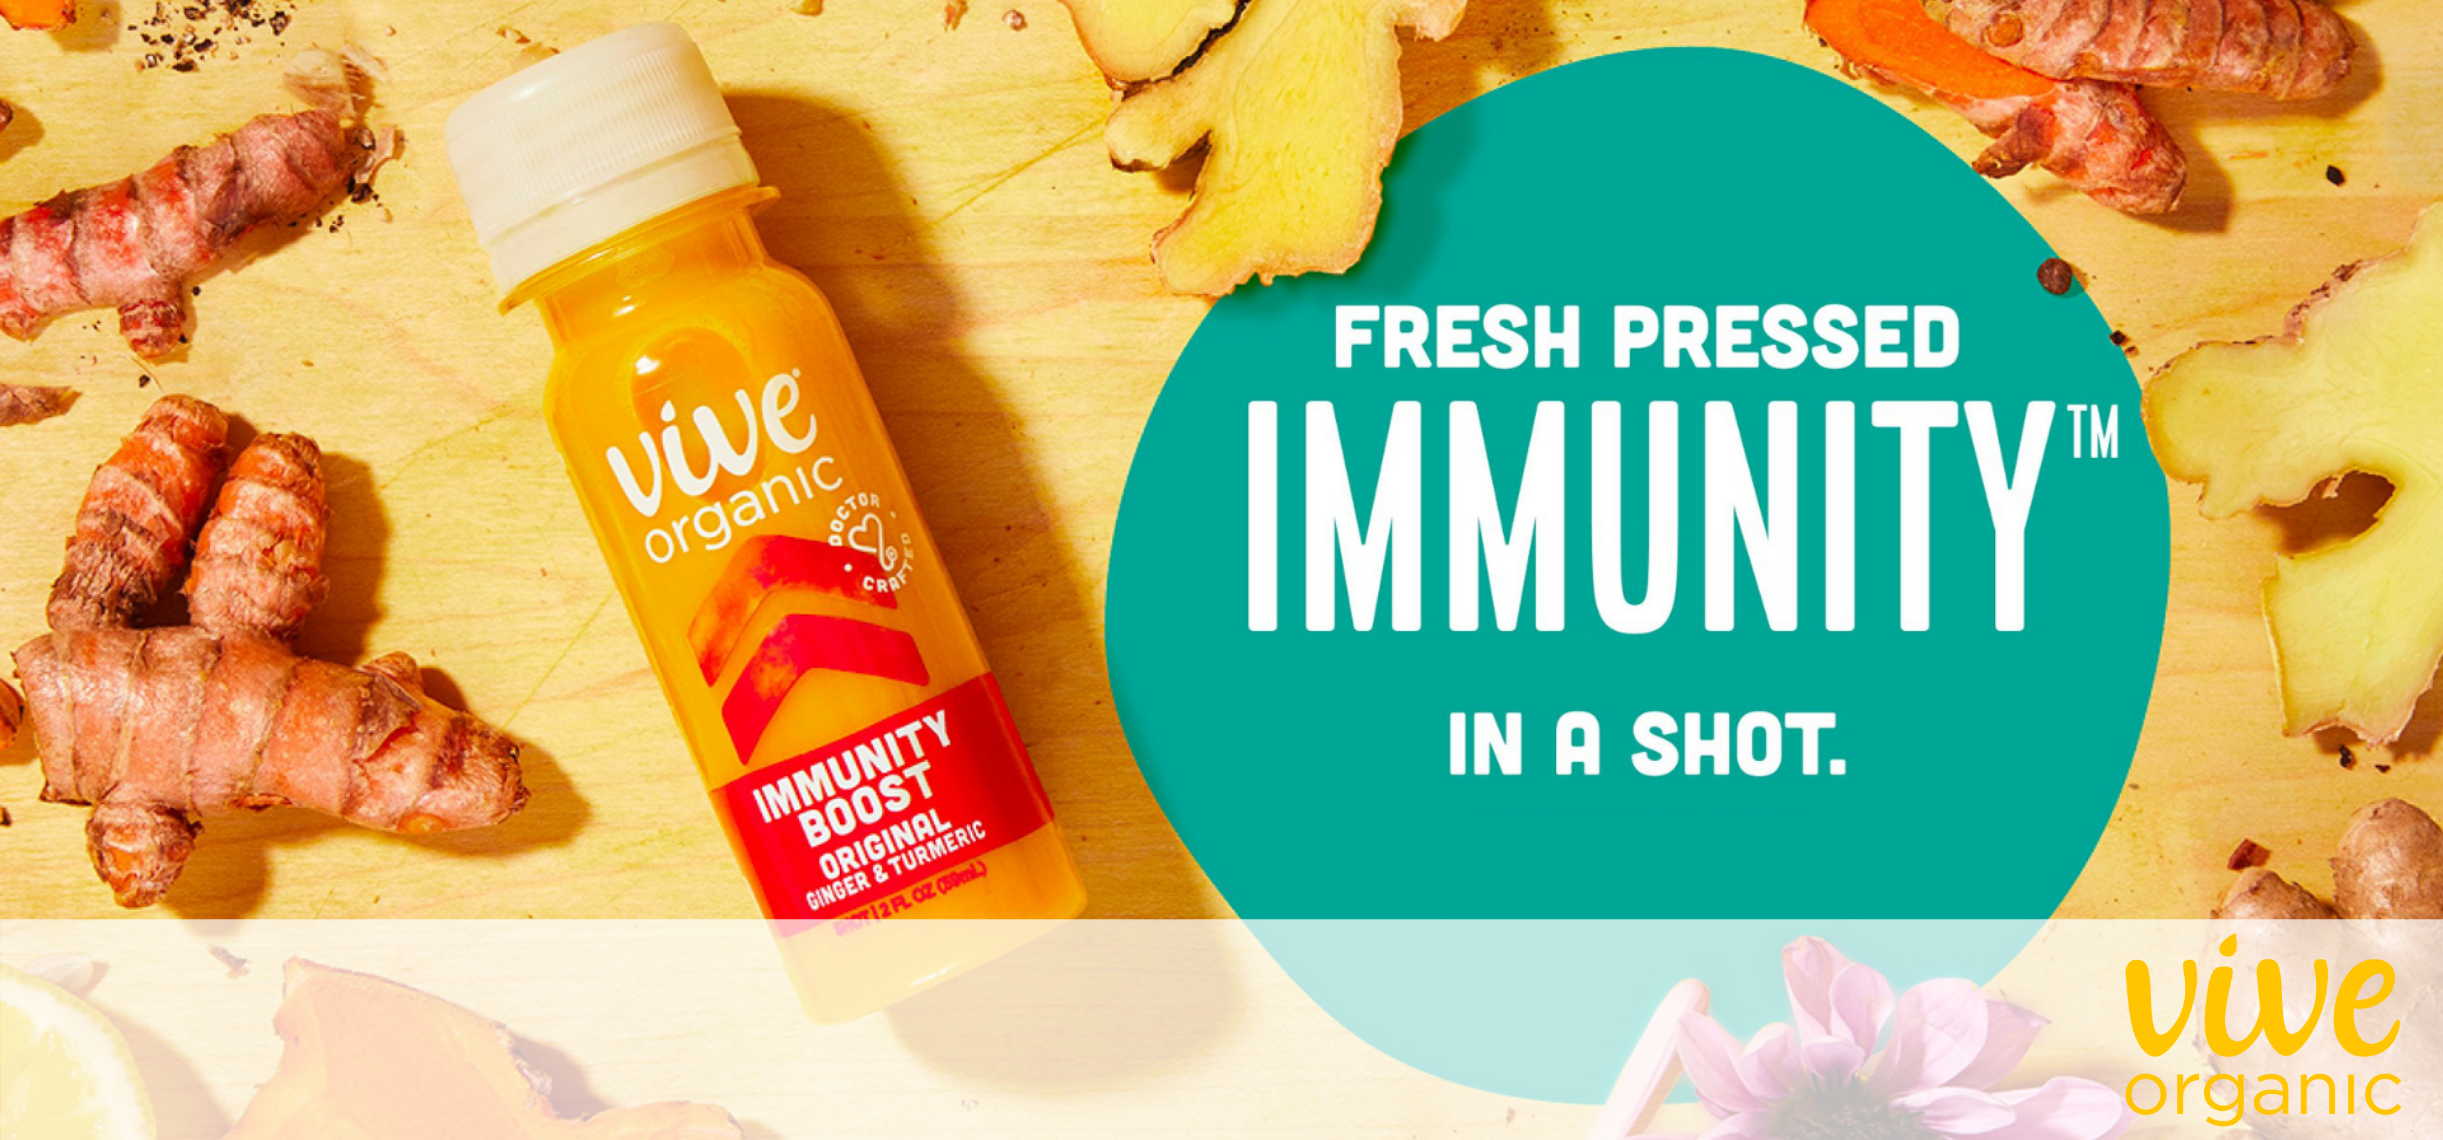 VIVE Organic Wellness & Immunity Shots